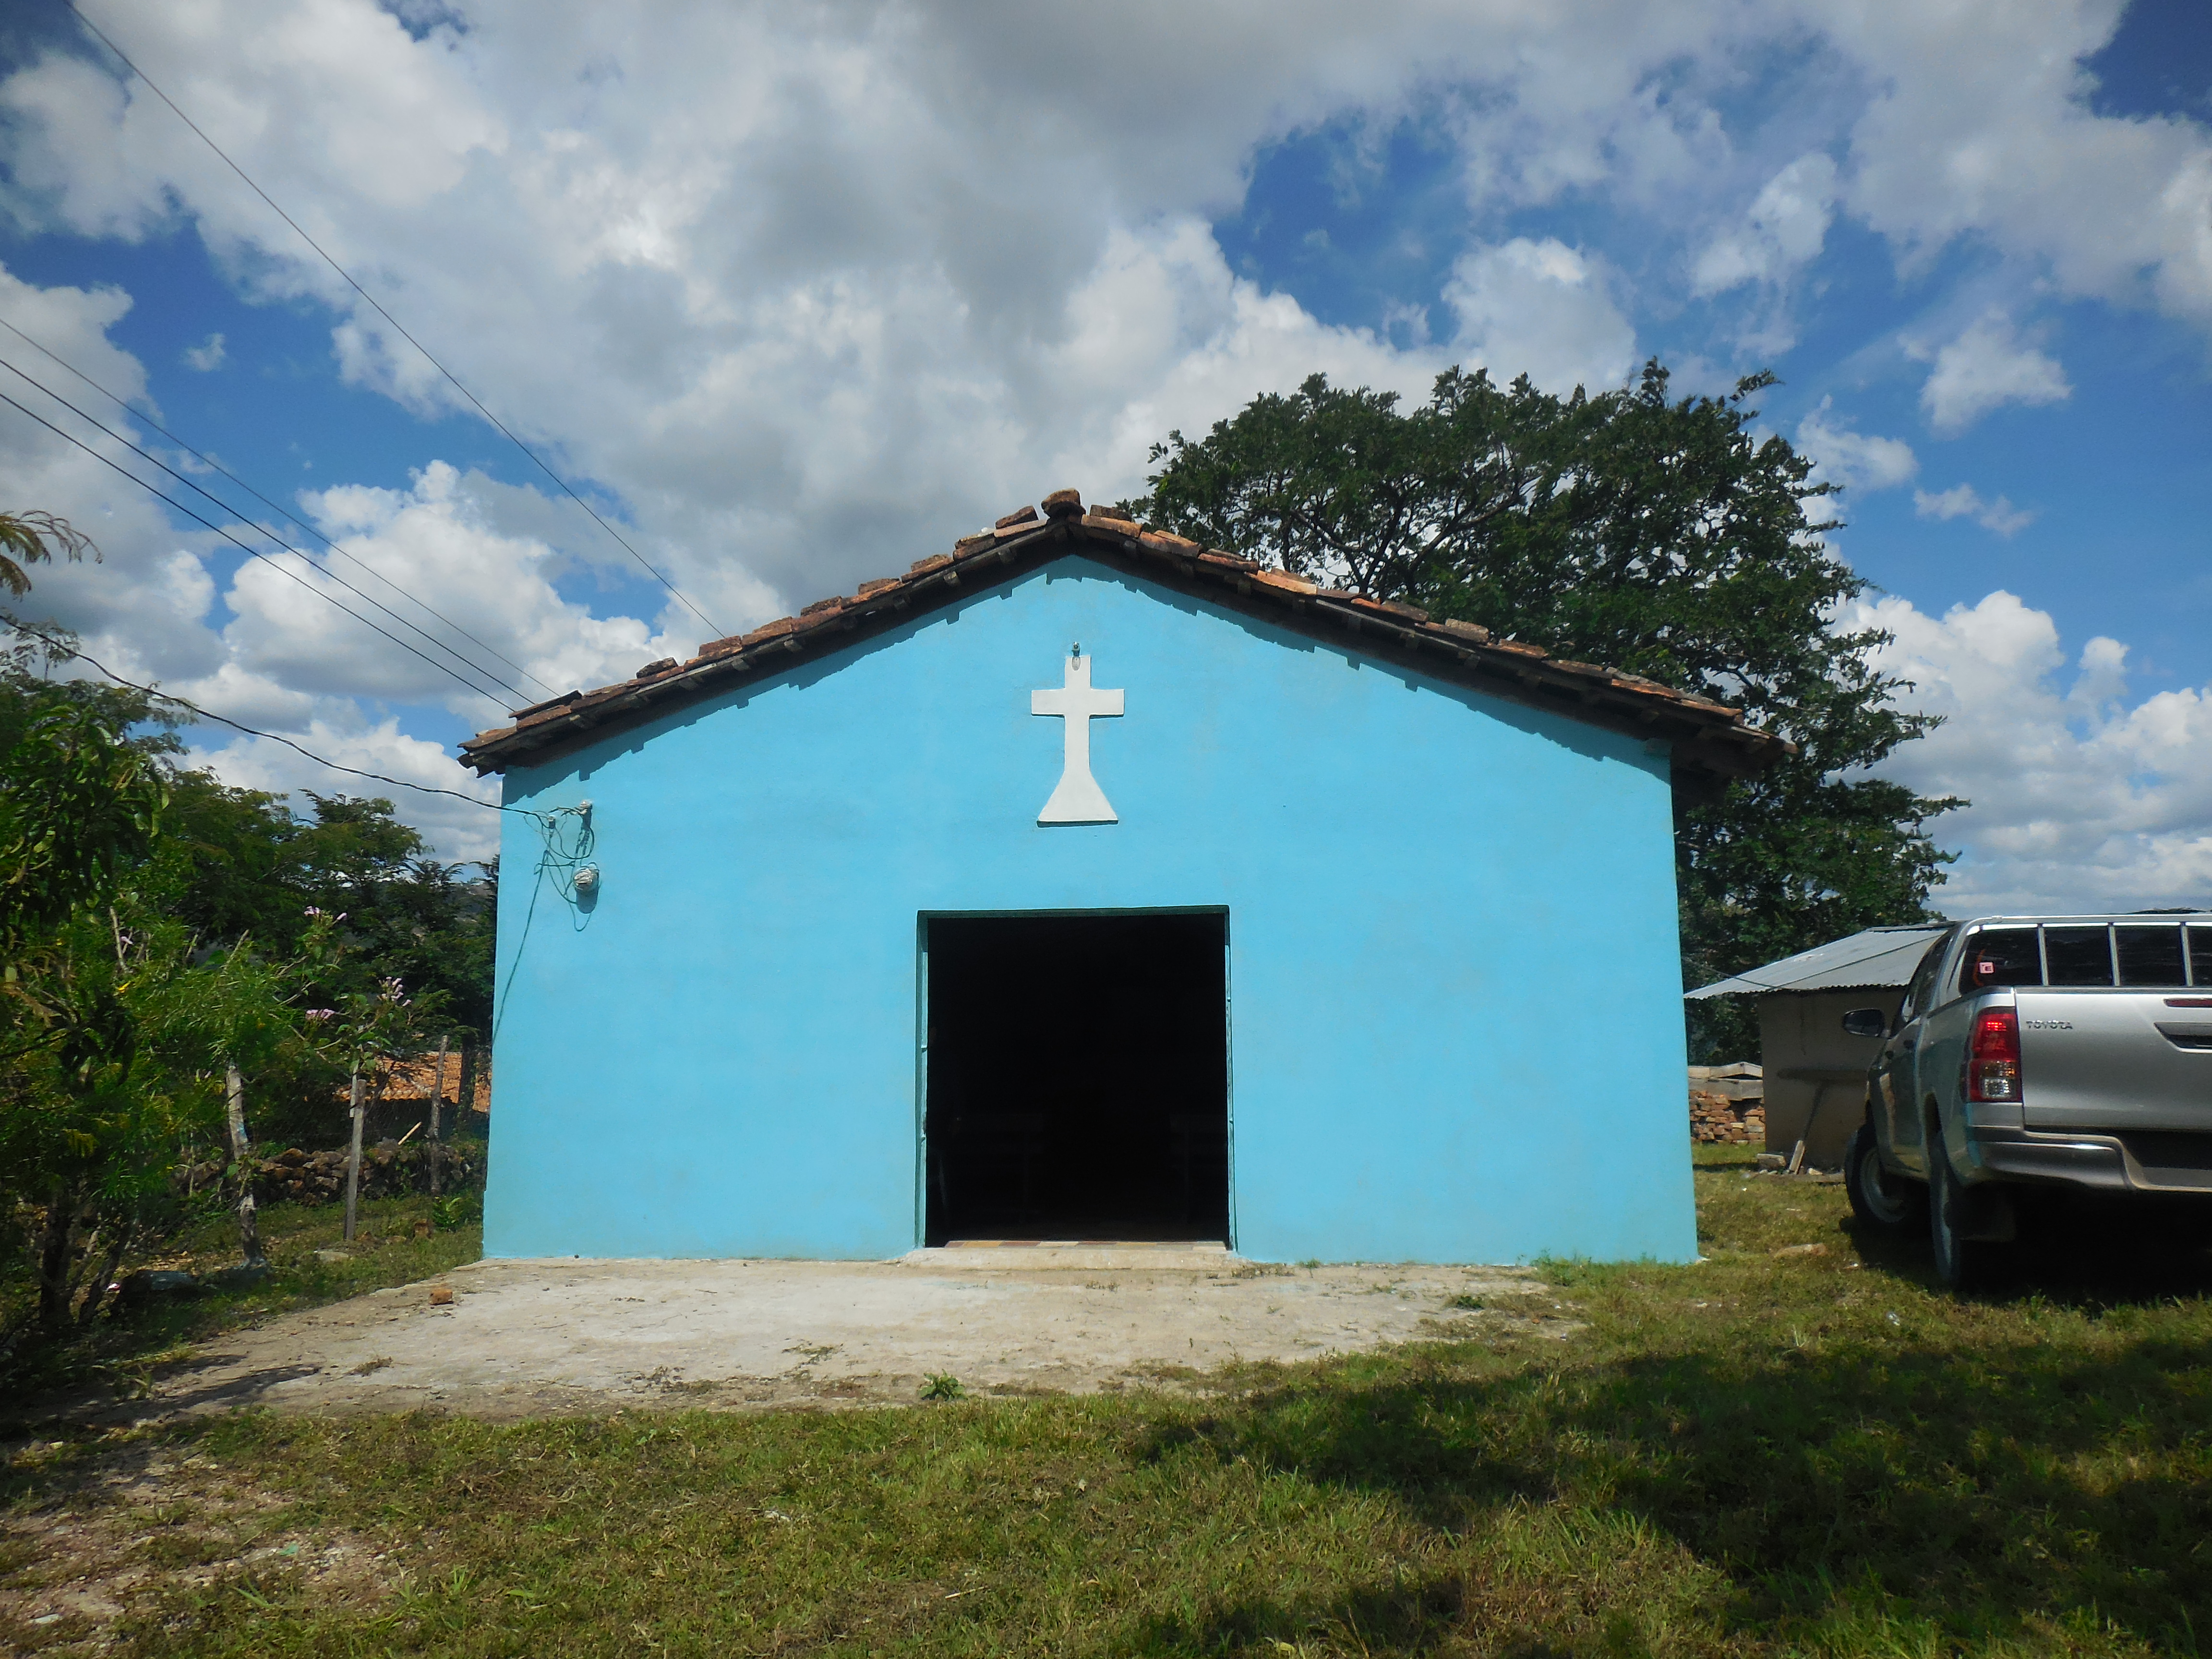 The Church of Malicre